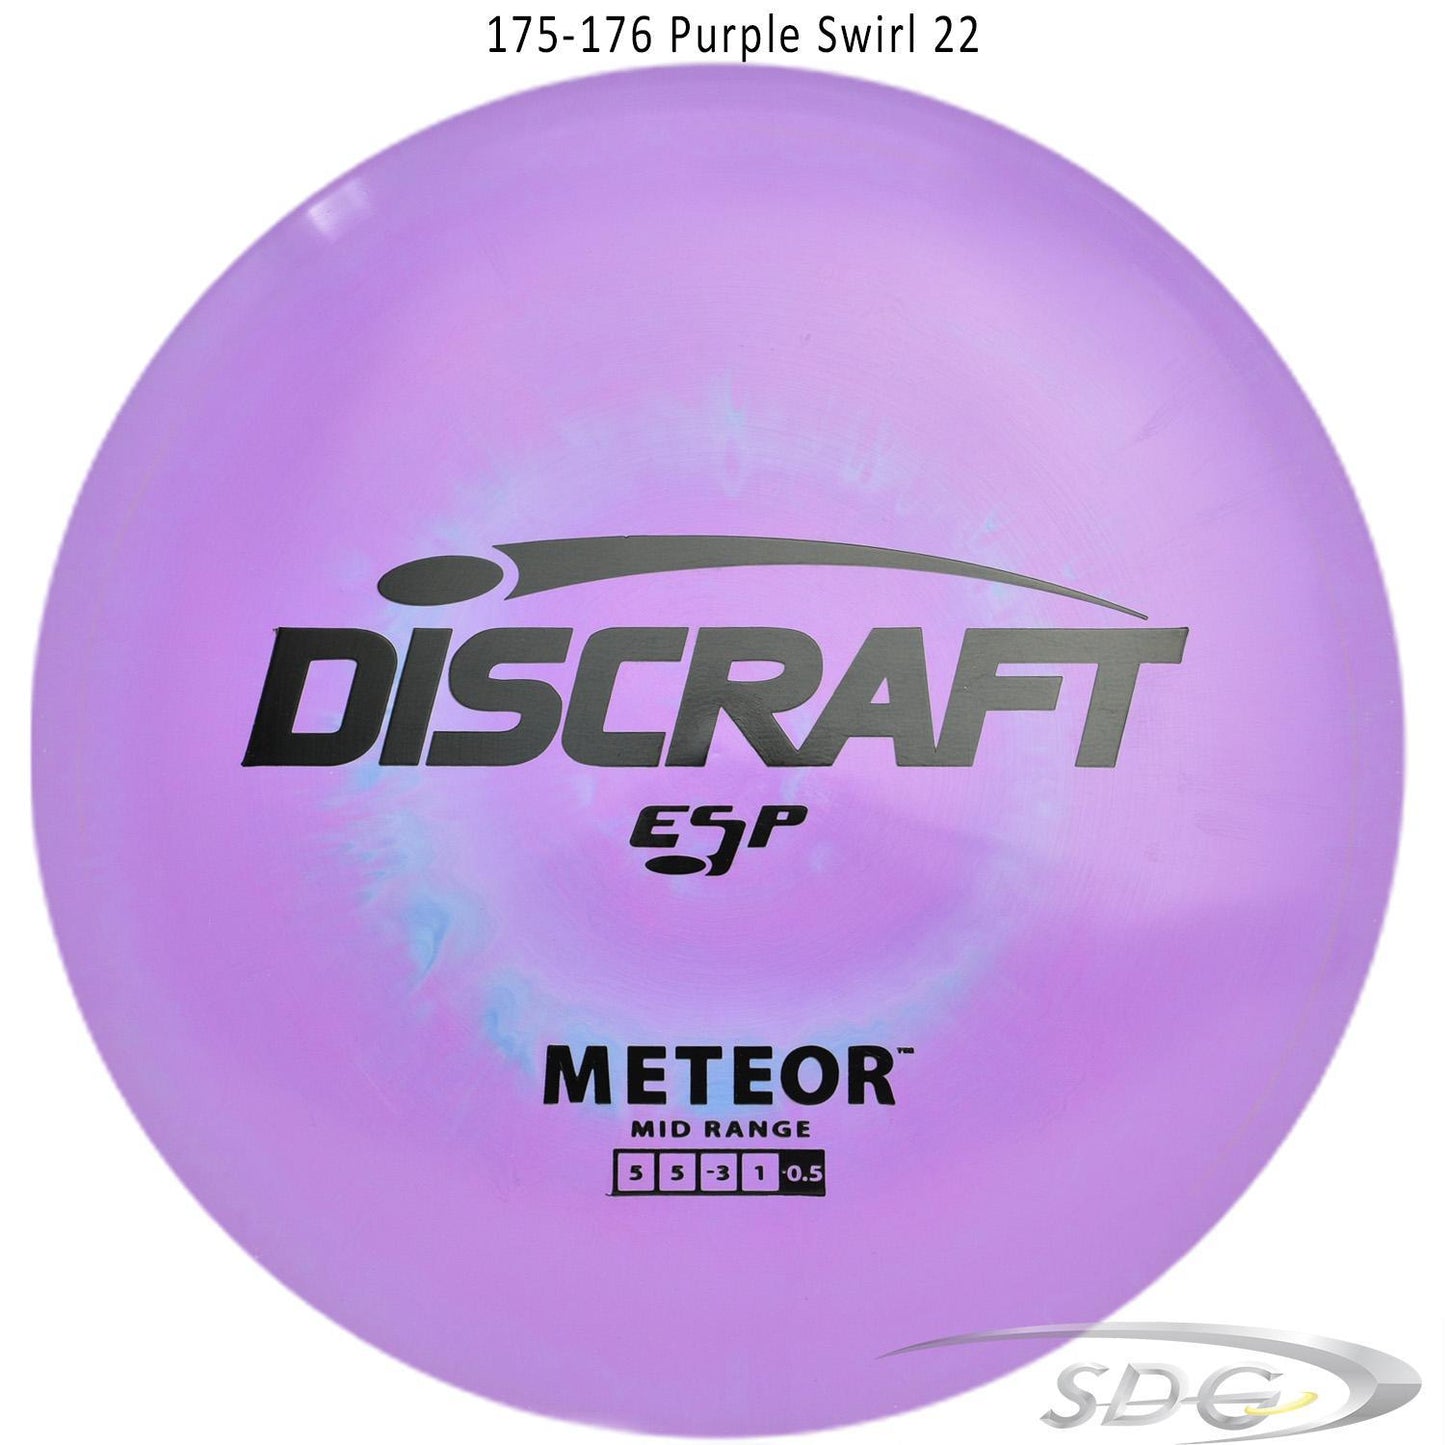 discraft-esp-meteor-disc-golf-mid-range 175-176 Purple Swirl 22